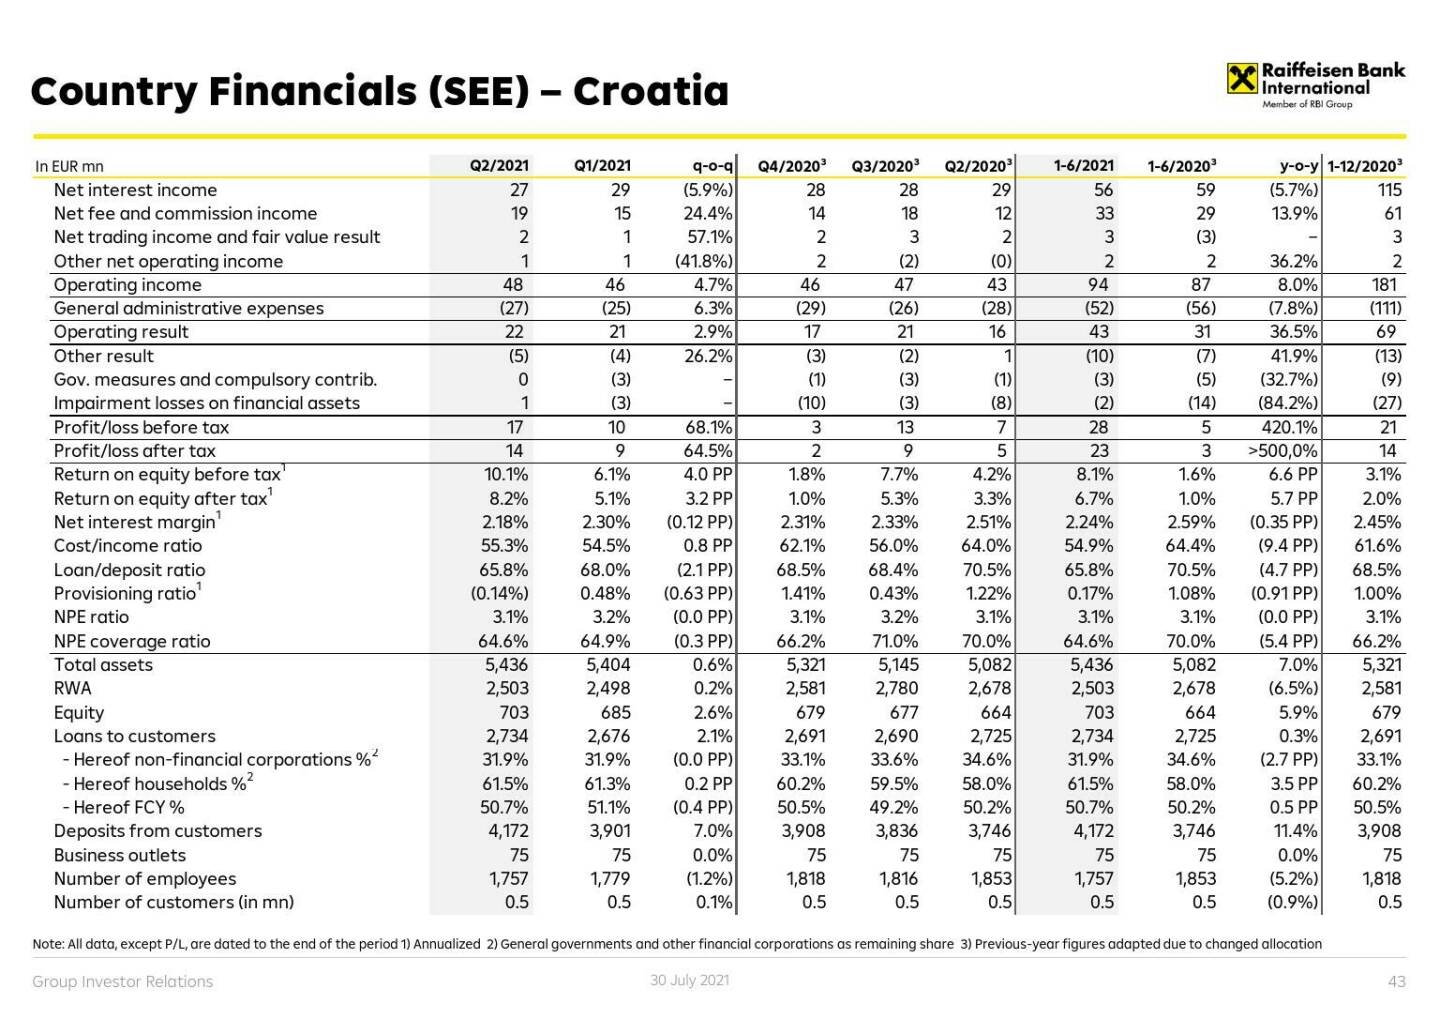 RBI - Country financials (CE) - Croatia